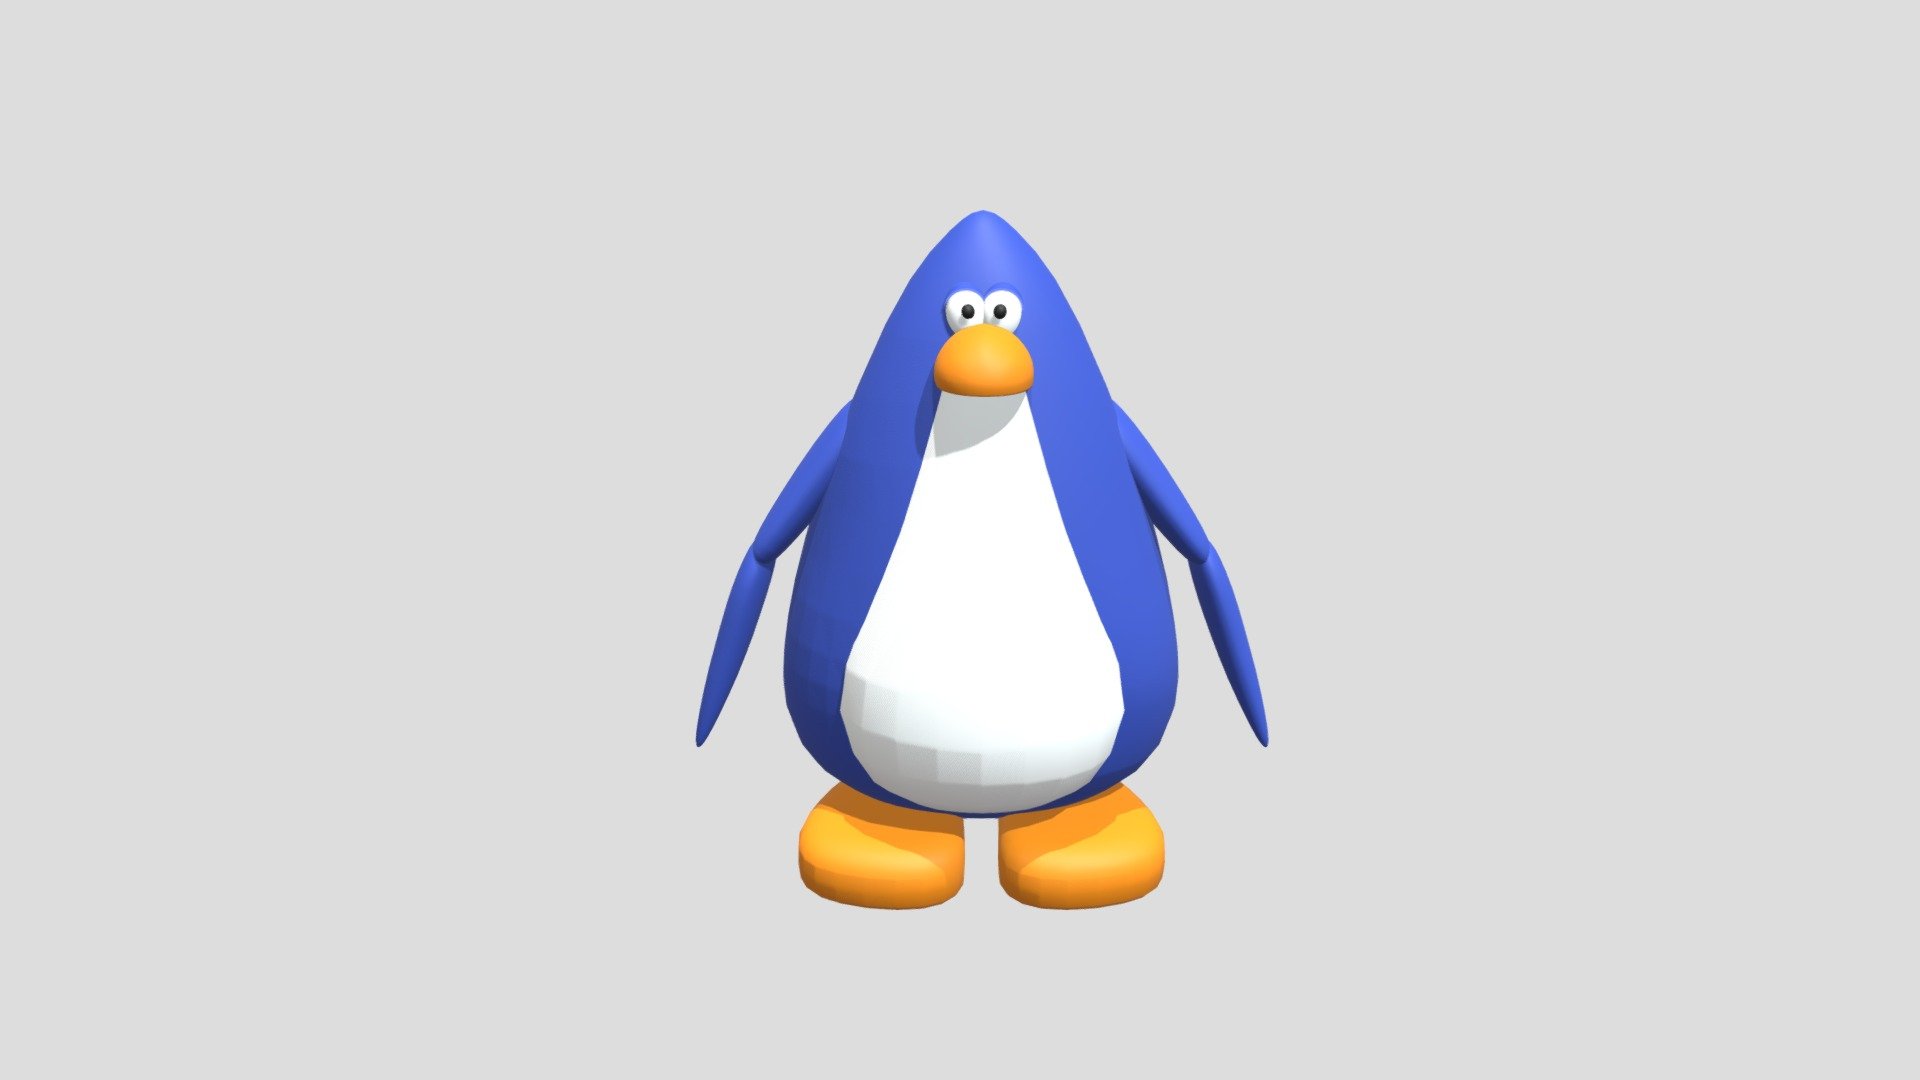 Dancing penguin - Club Penguin Official Help Site